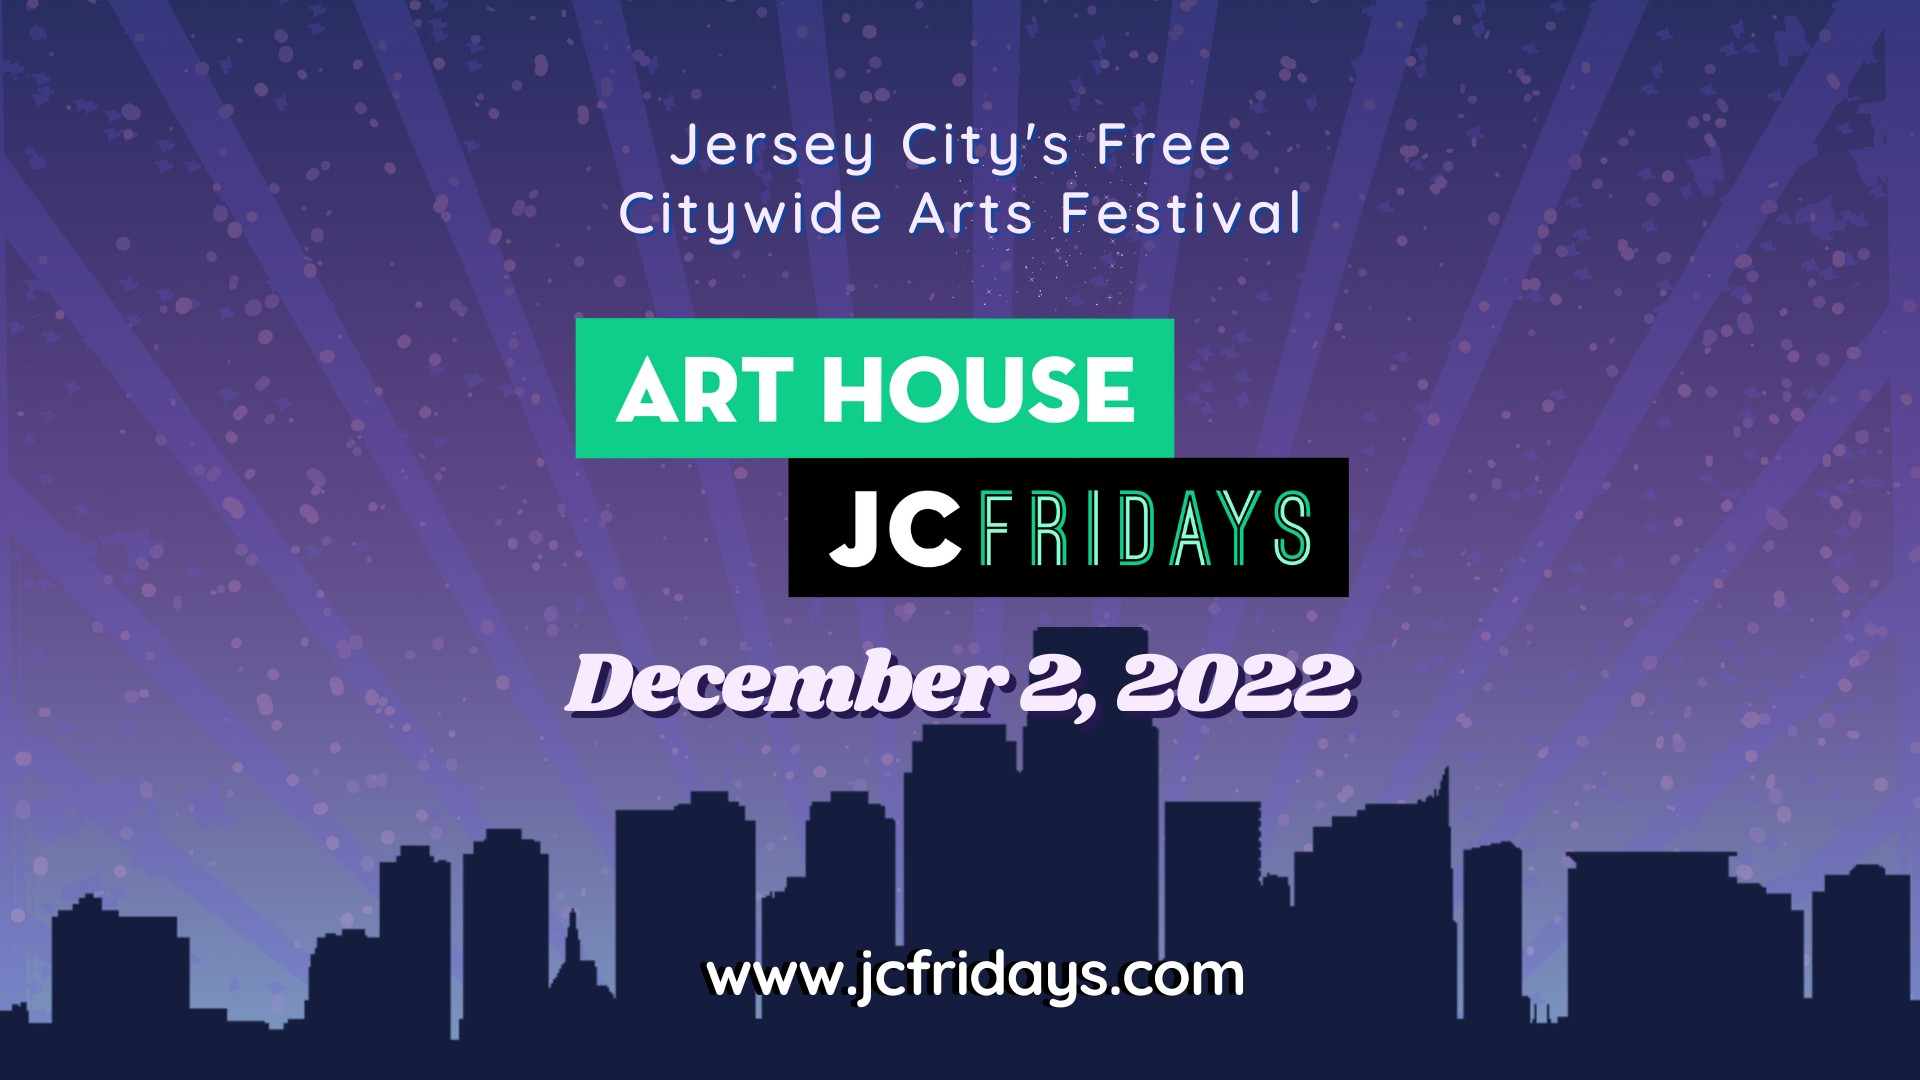 Jersey City's Free Citywide Arts Festival, Art House JC Fridays, December 2, 2022